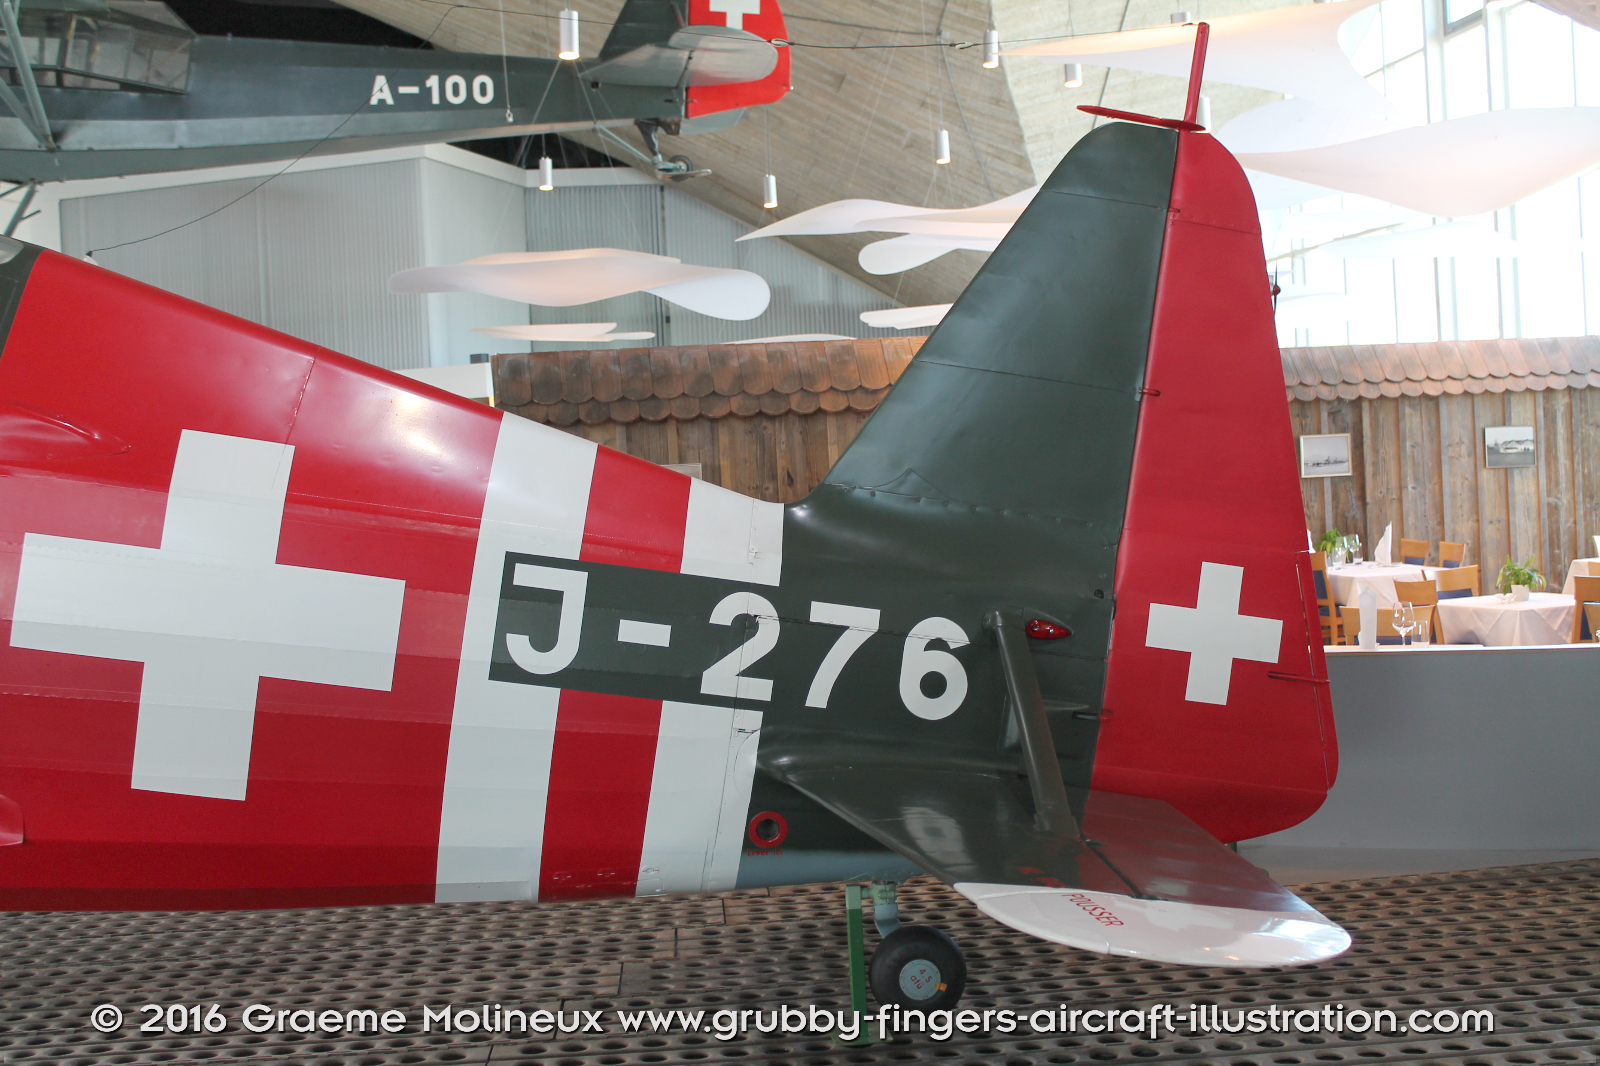 MORANE-SAULNIER_MS-506_J-276_Swiss_Air_Force_Museum_2015_22_GrubbyFingers